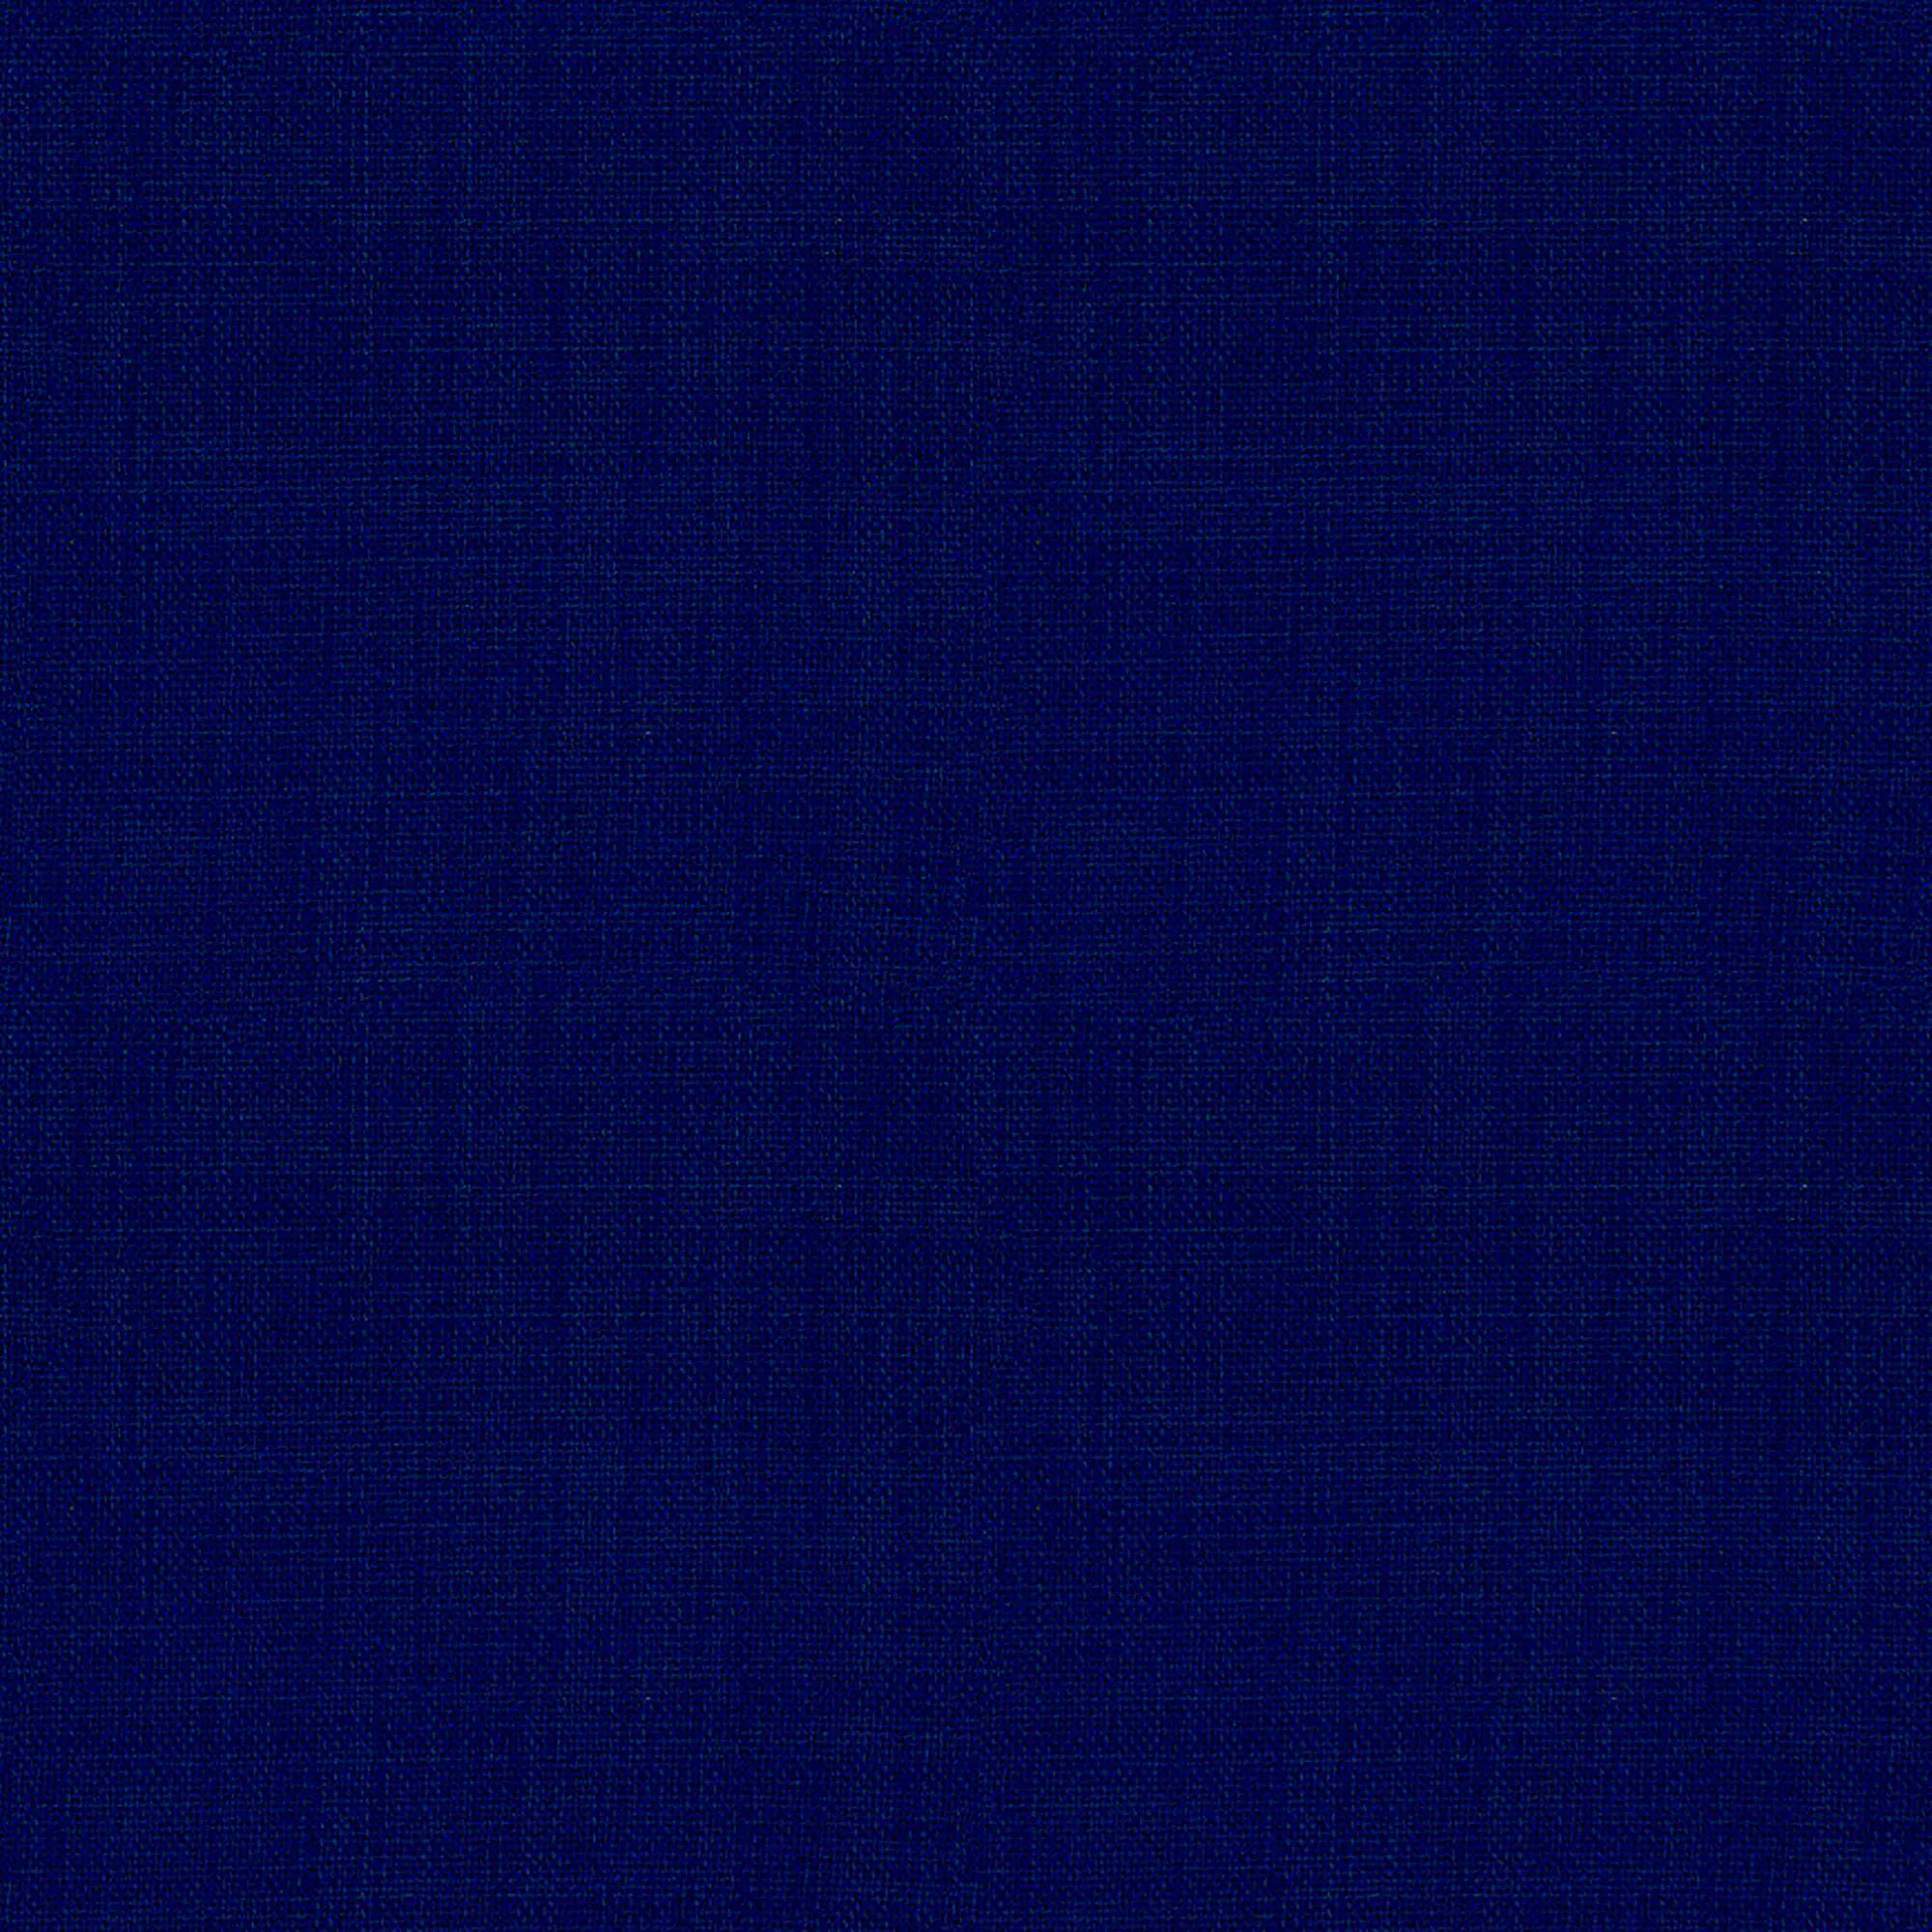 Tela al corte jacquard linara azul ancho 300 cm